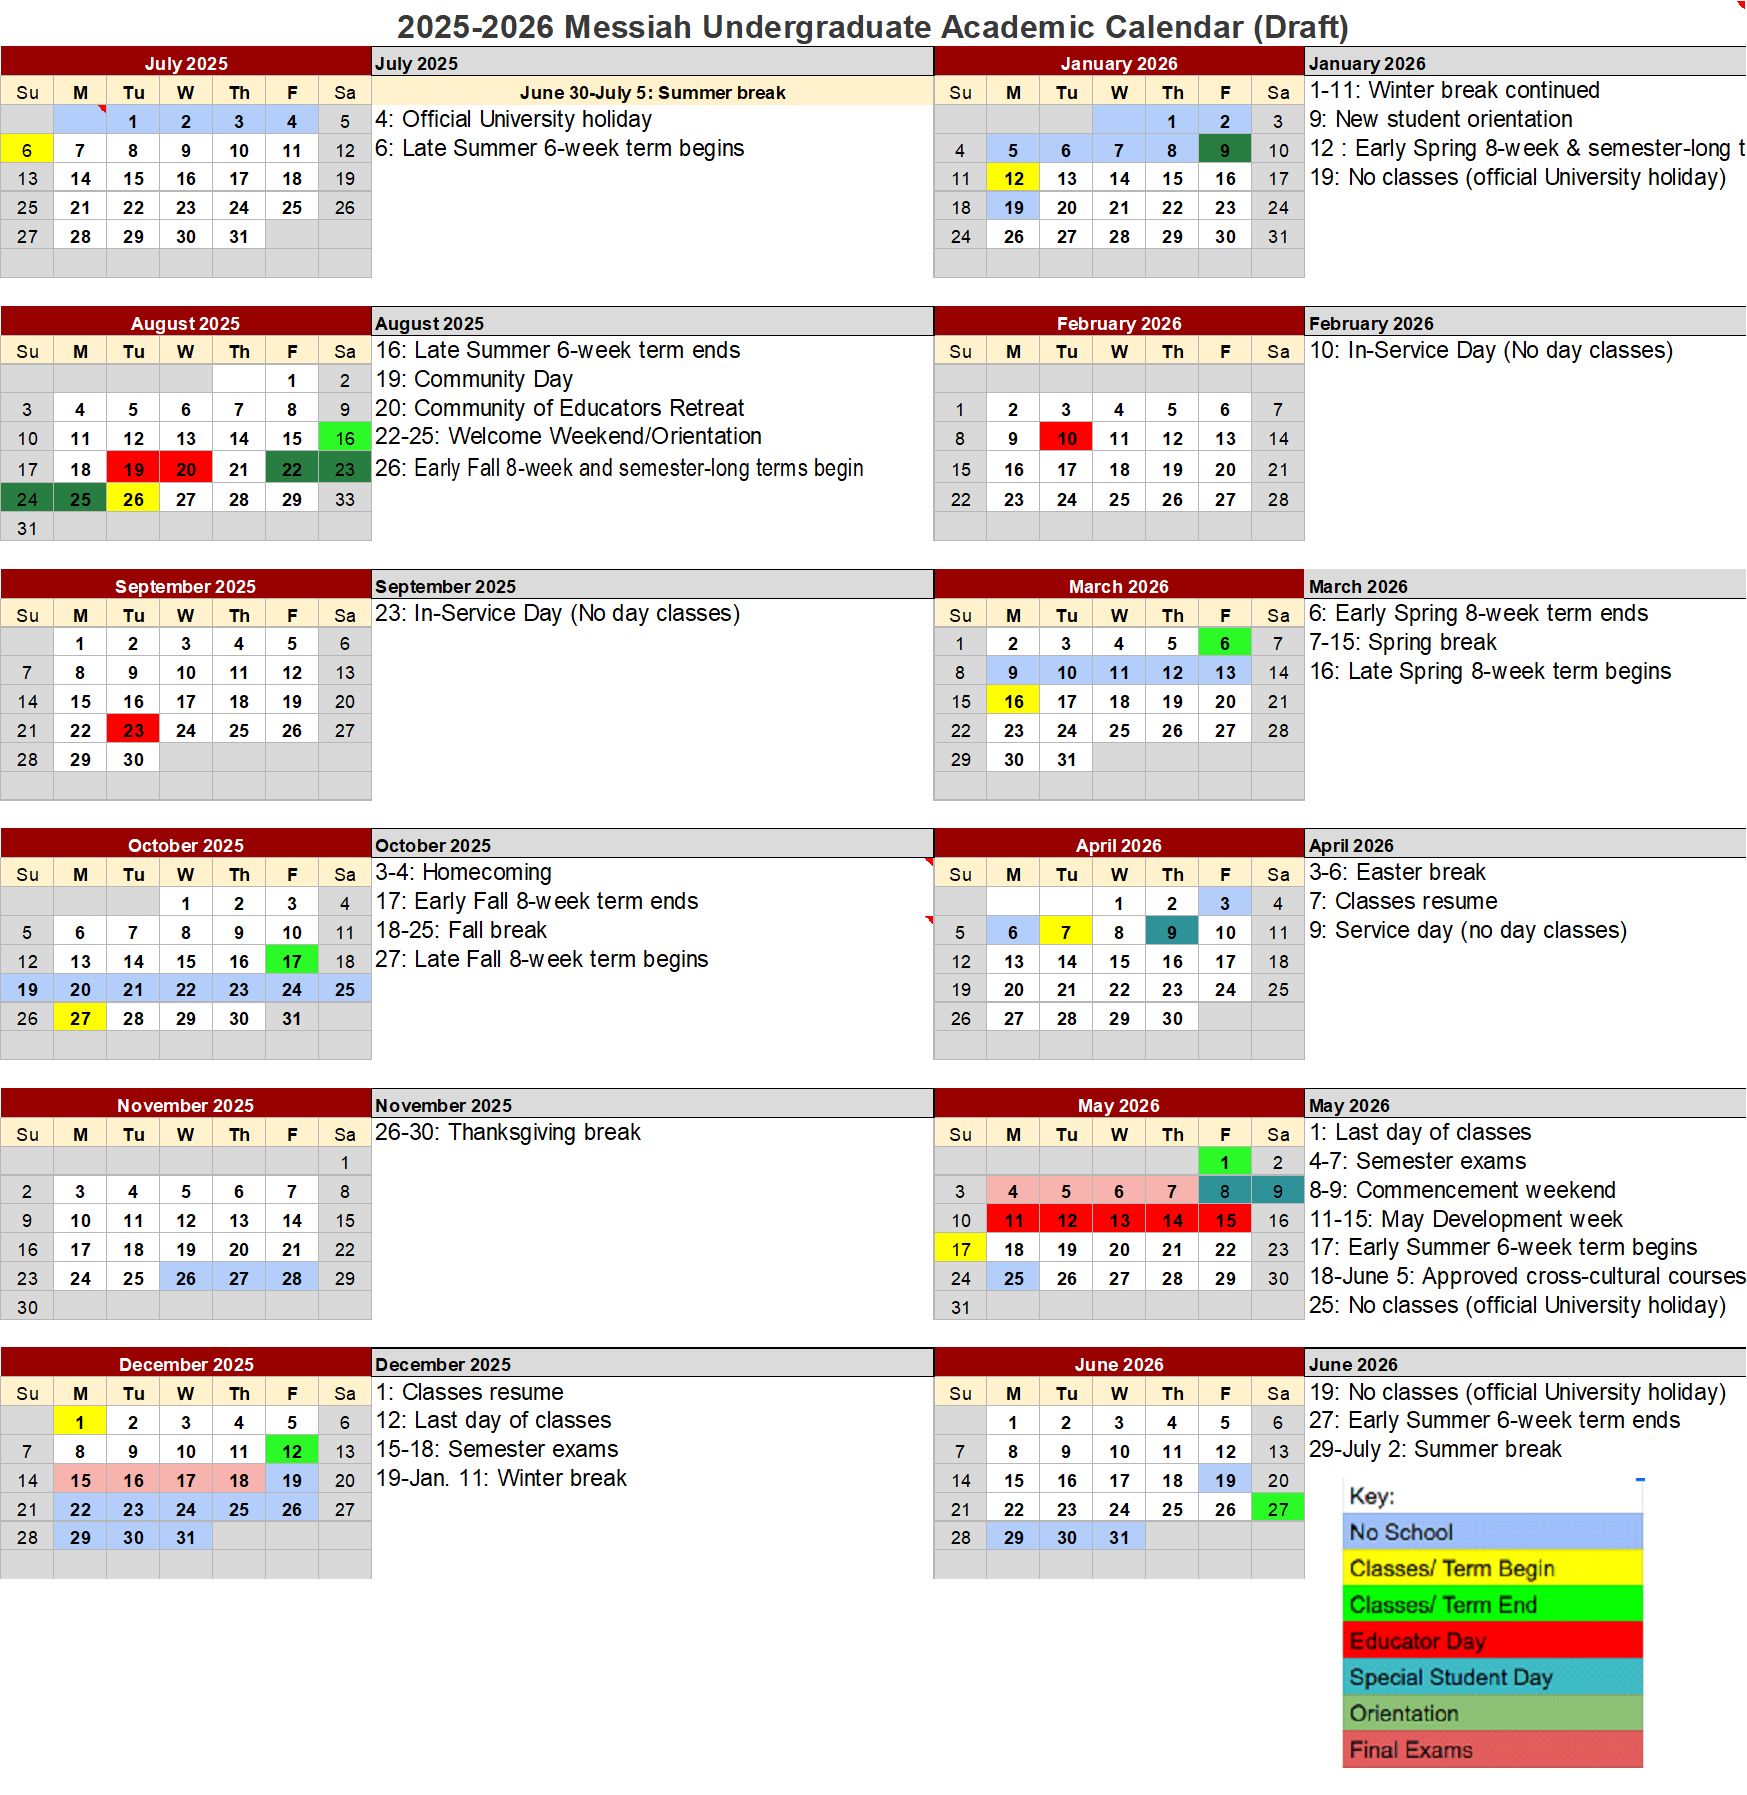 2025-2026 UG Academic Calendar 